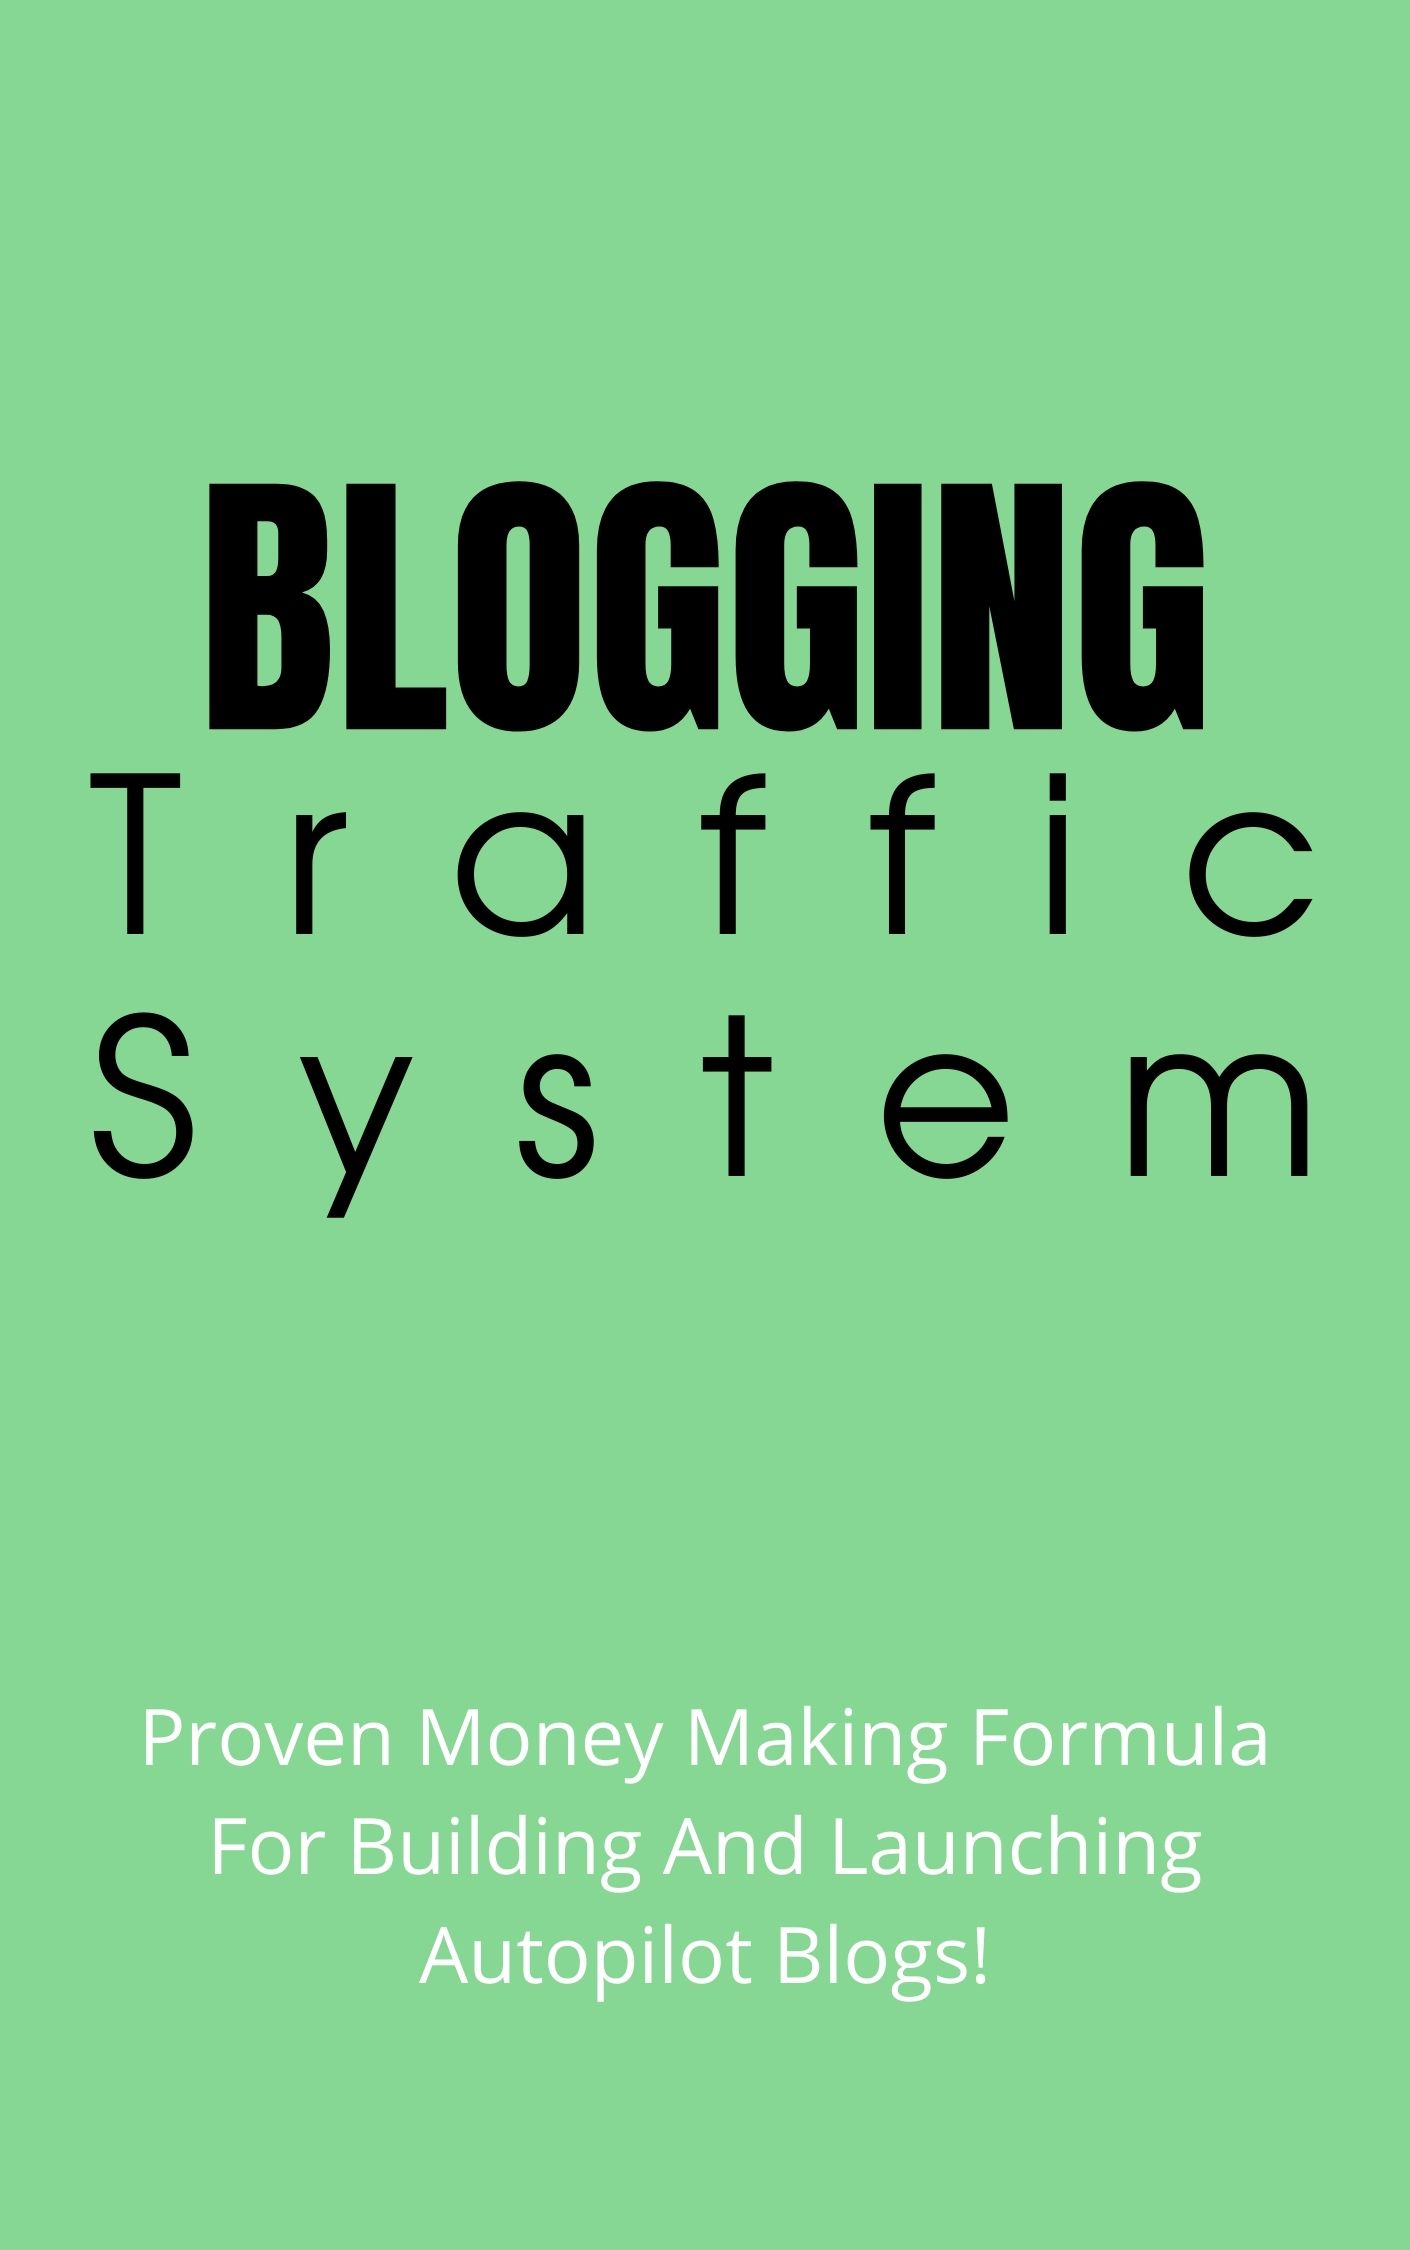 BloggingTrafficSystem Cover